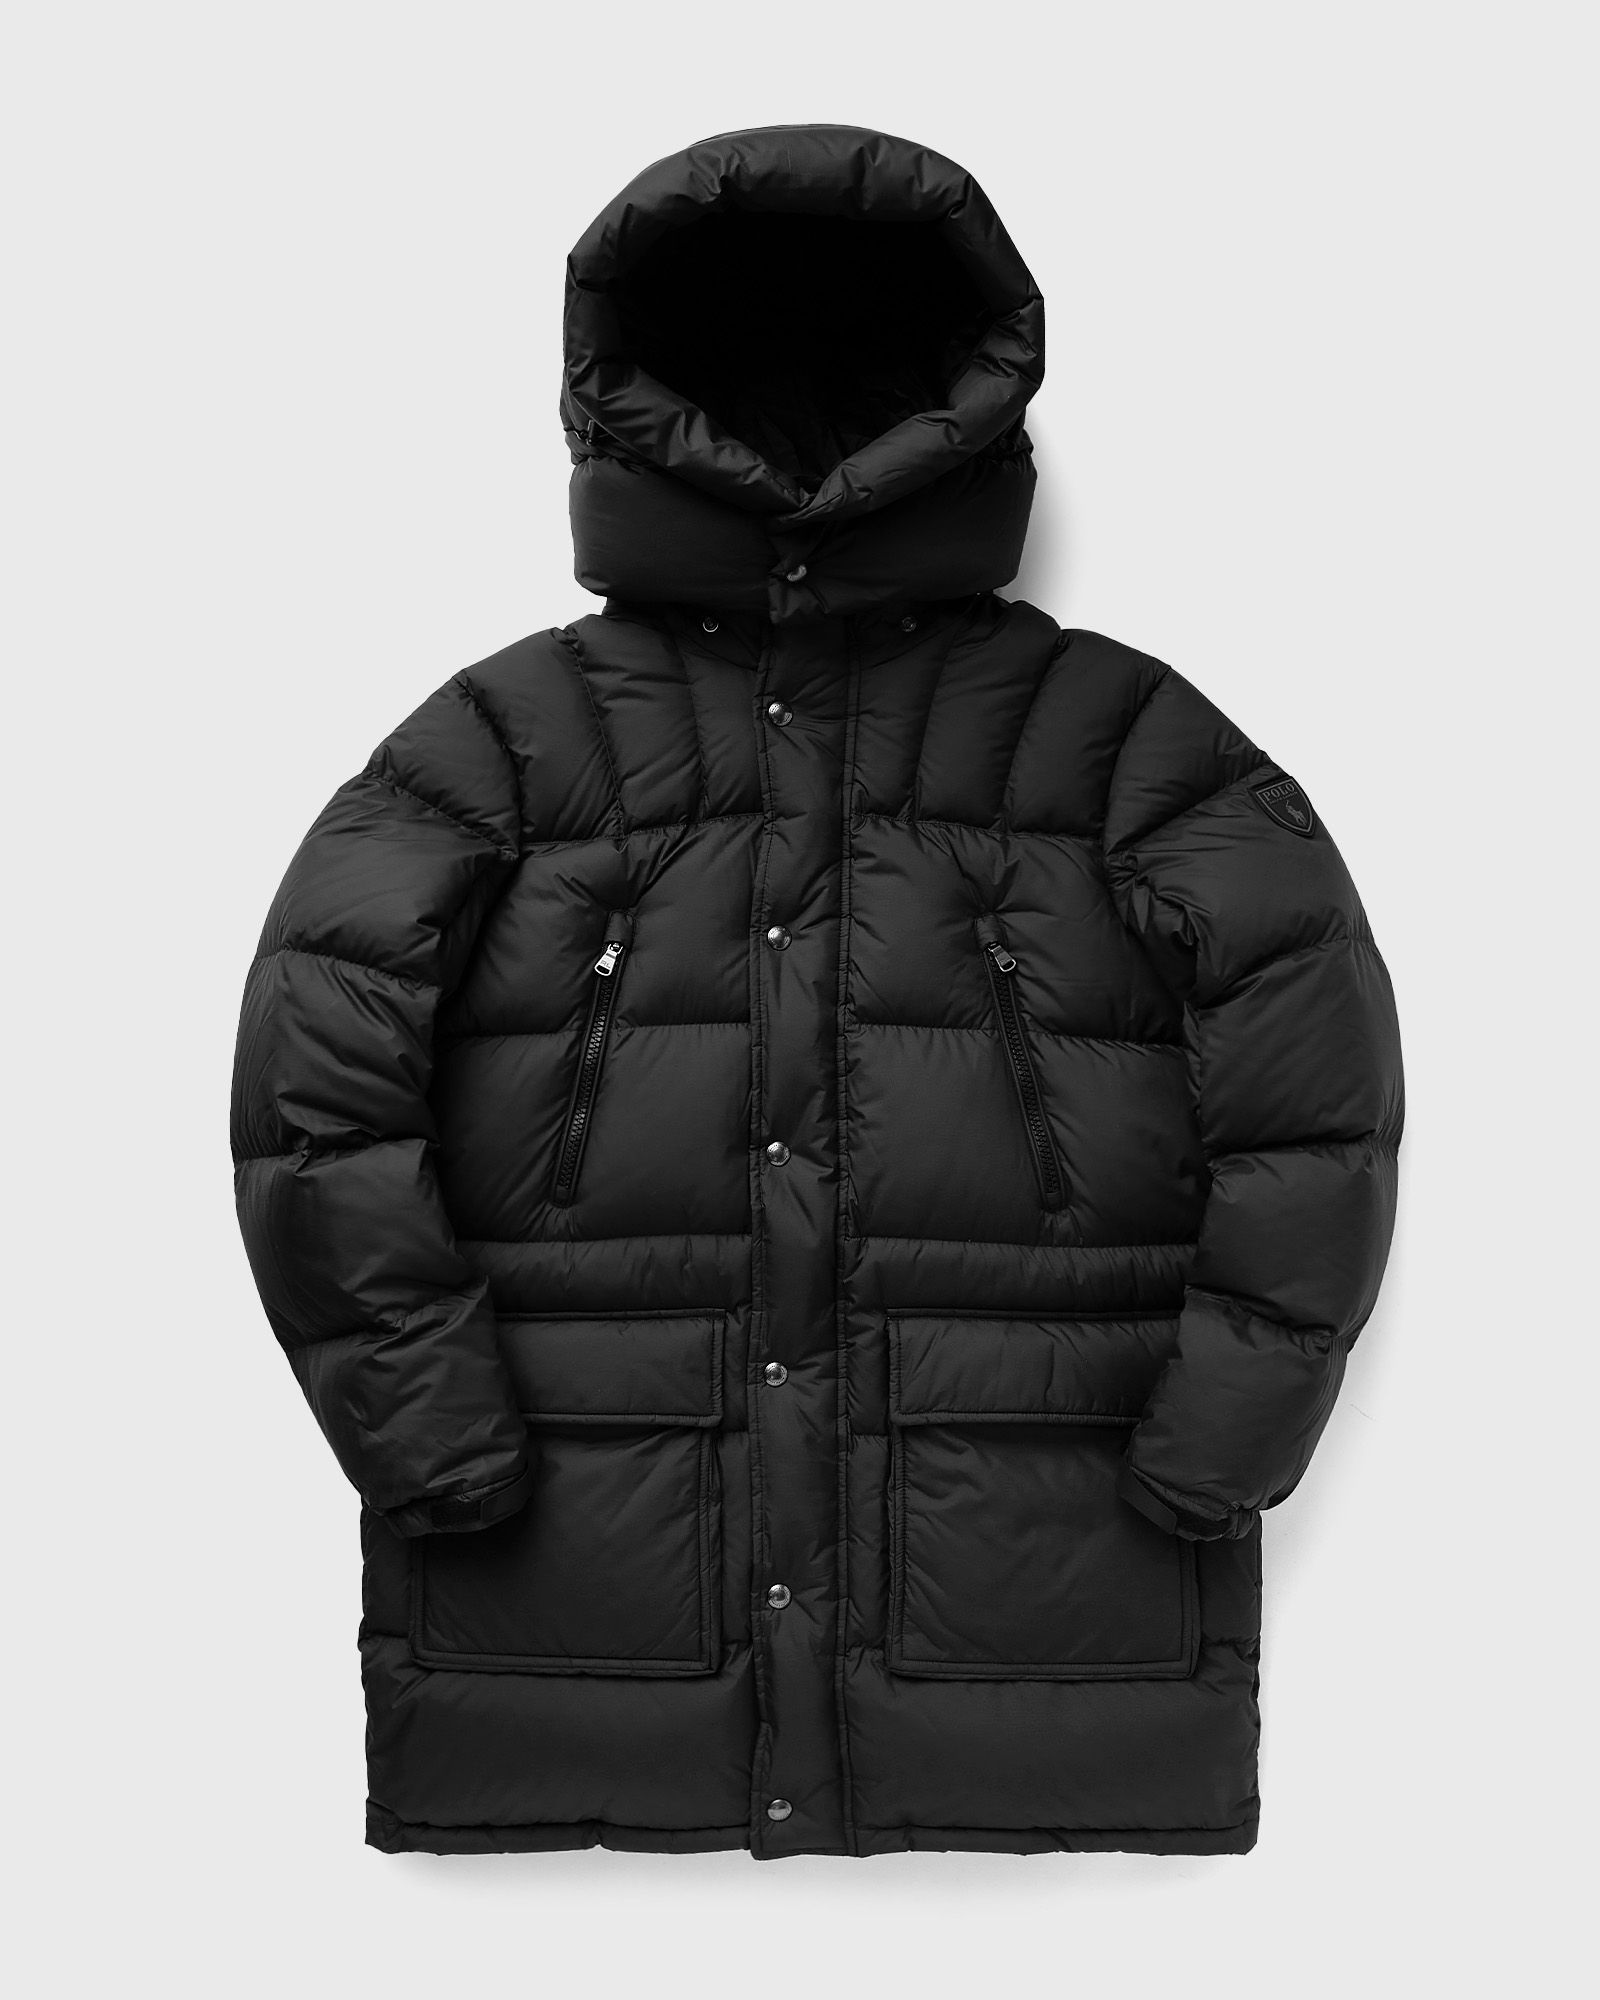 Polo Ralph Lauren - forester 2-insulated-coat men coats|down & puffer jackets black in größe:xxl